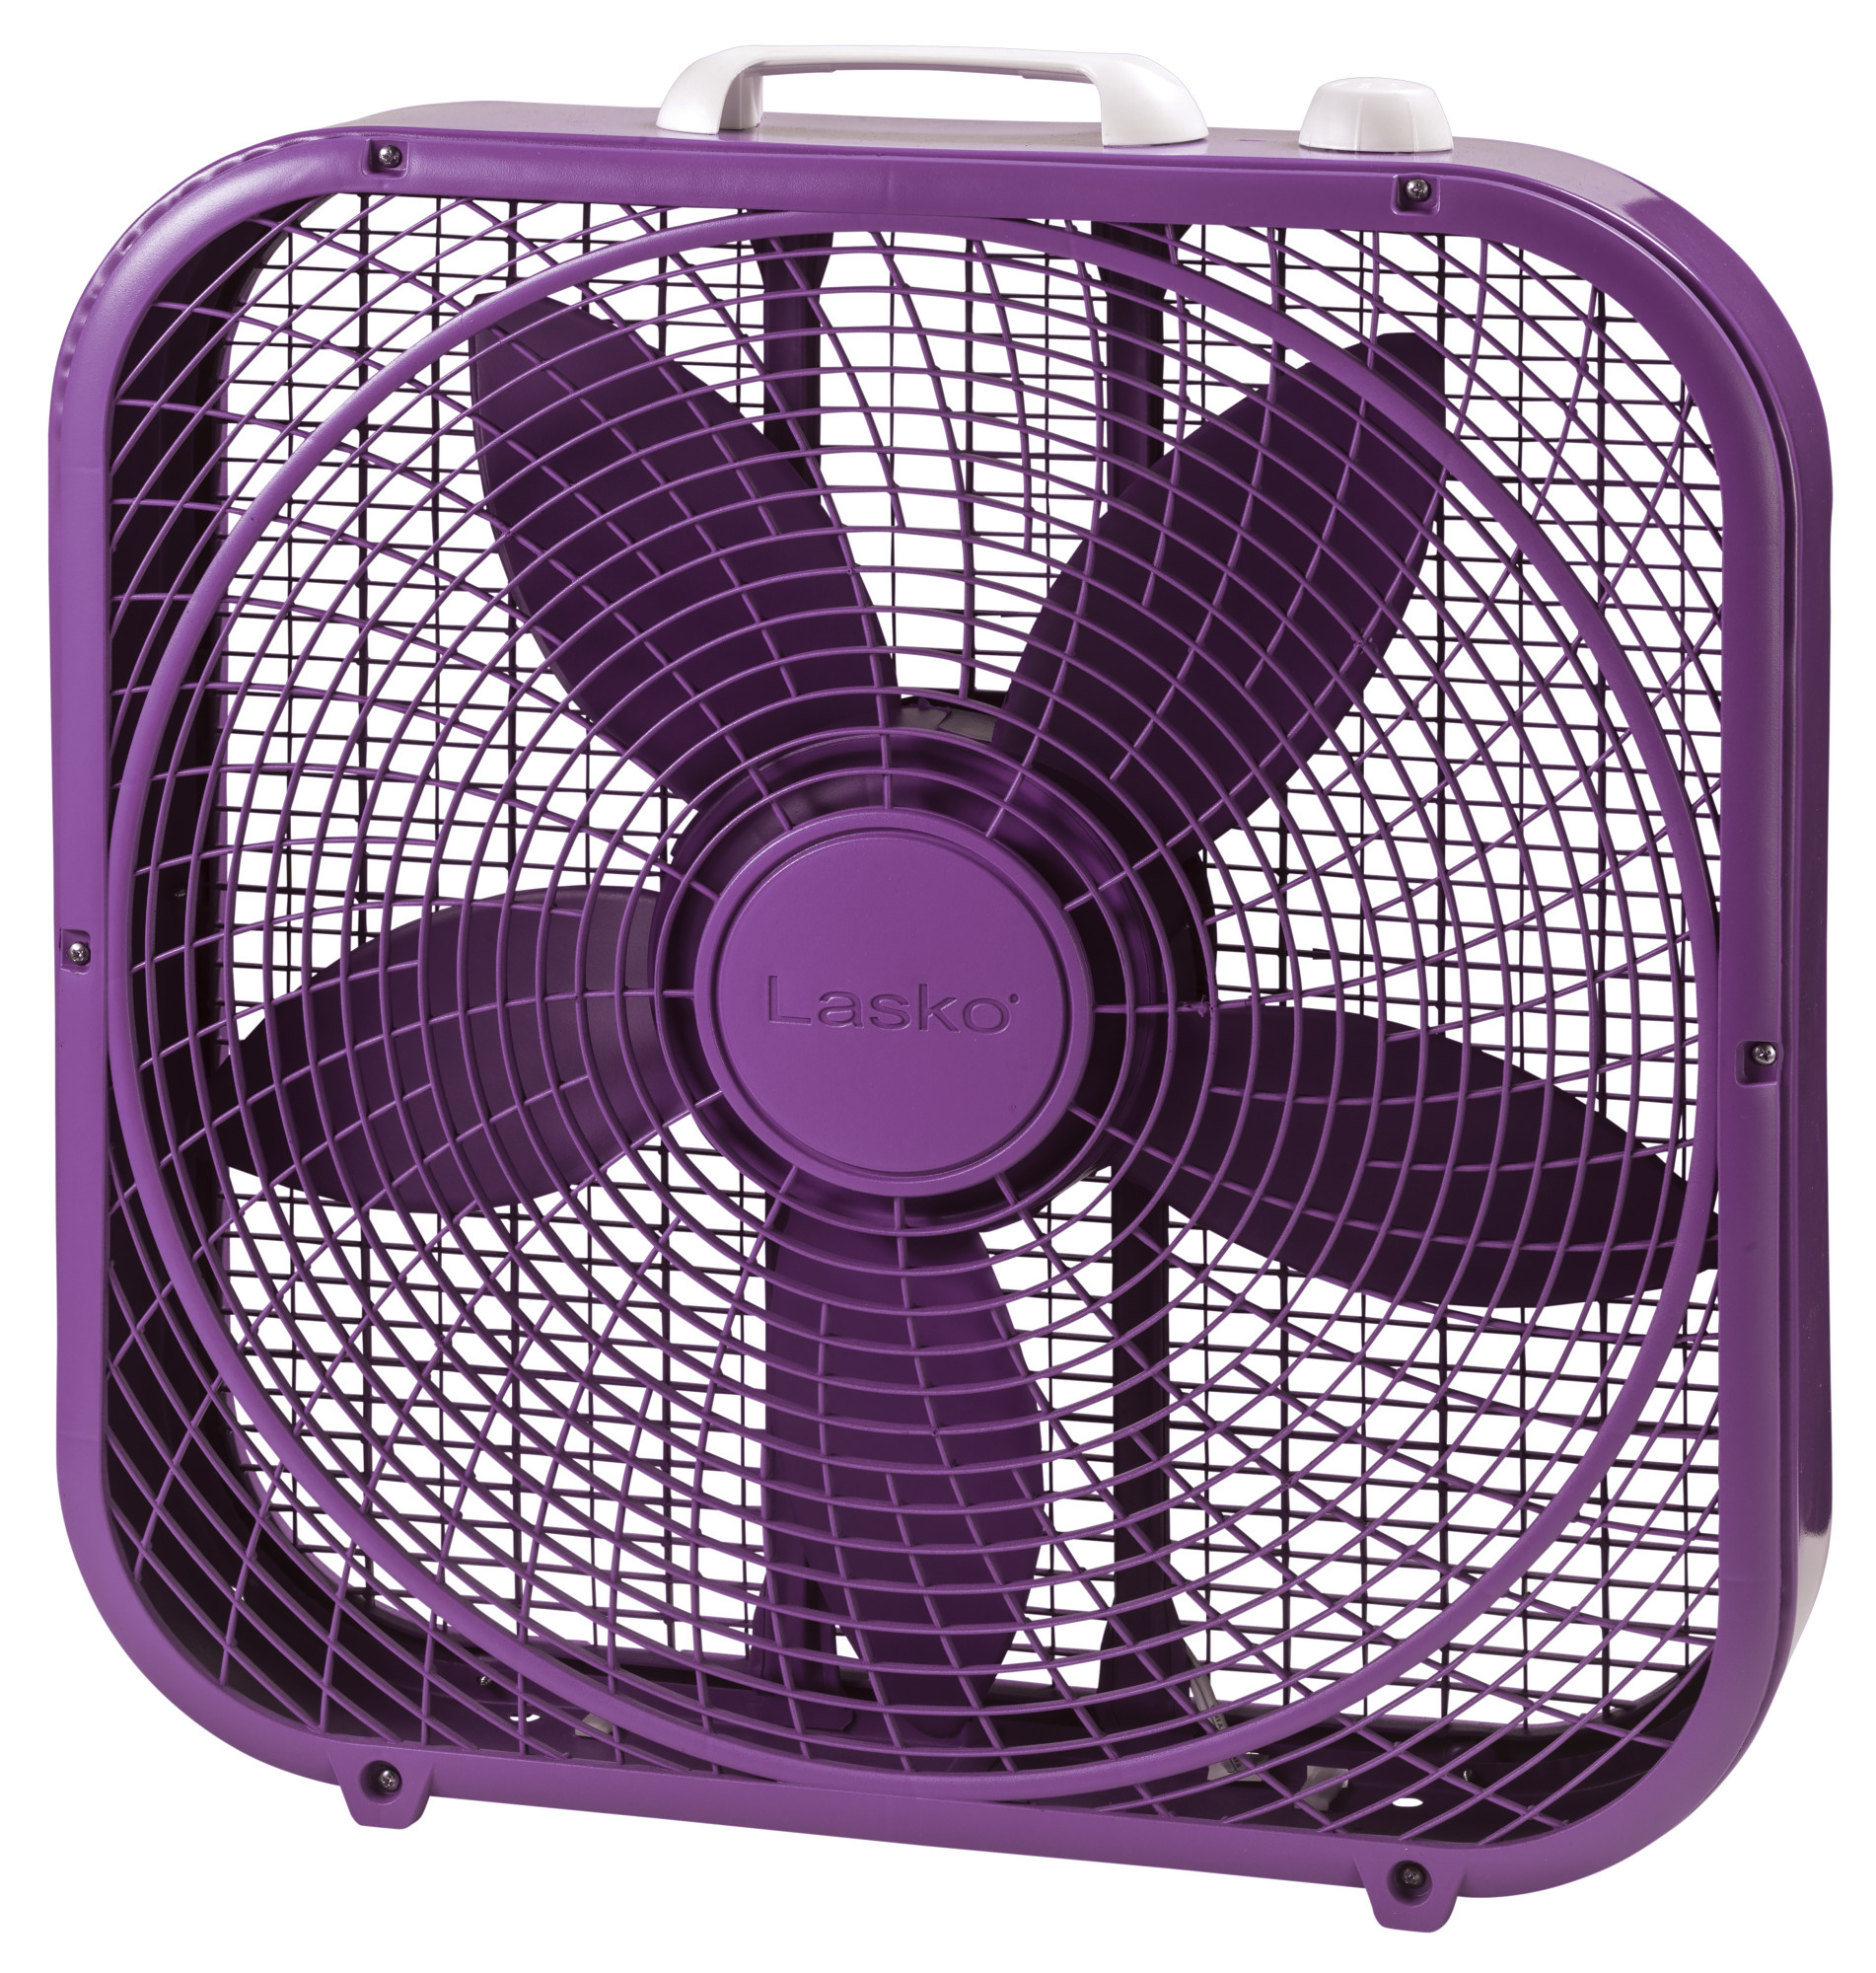 Lasko Cool Colors 20" Energy Efficient Box Fan, 3 Speeds, 22.5" H, Purple, B20309, New - image 1 of 5